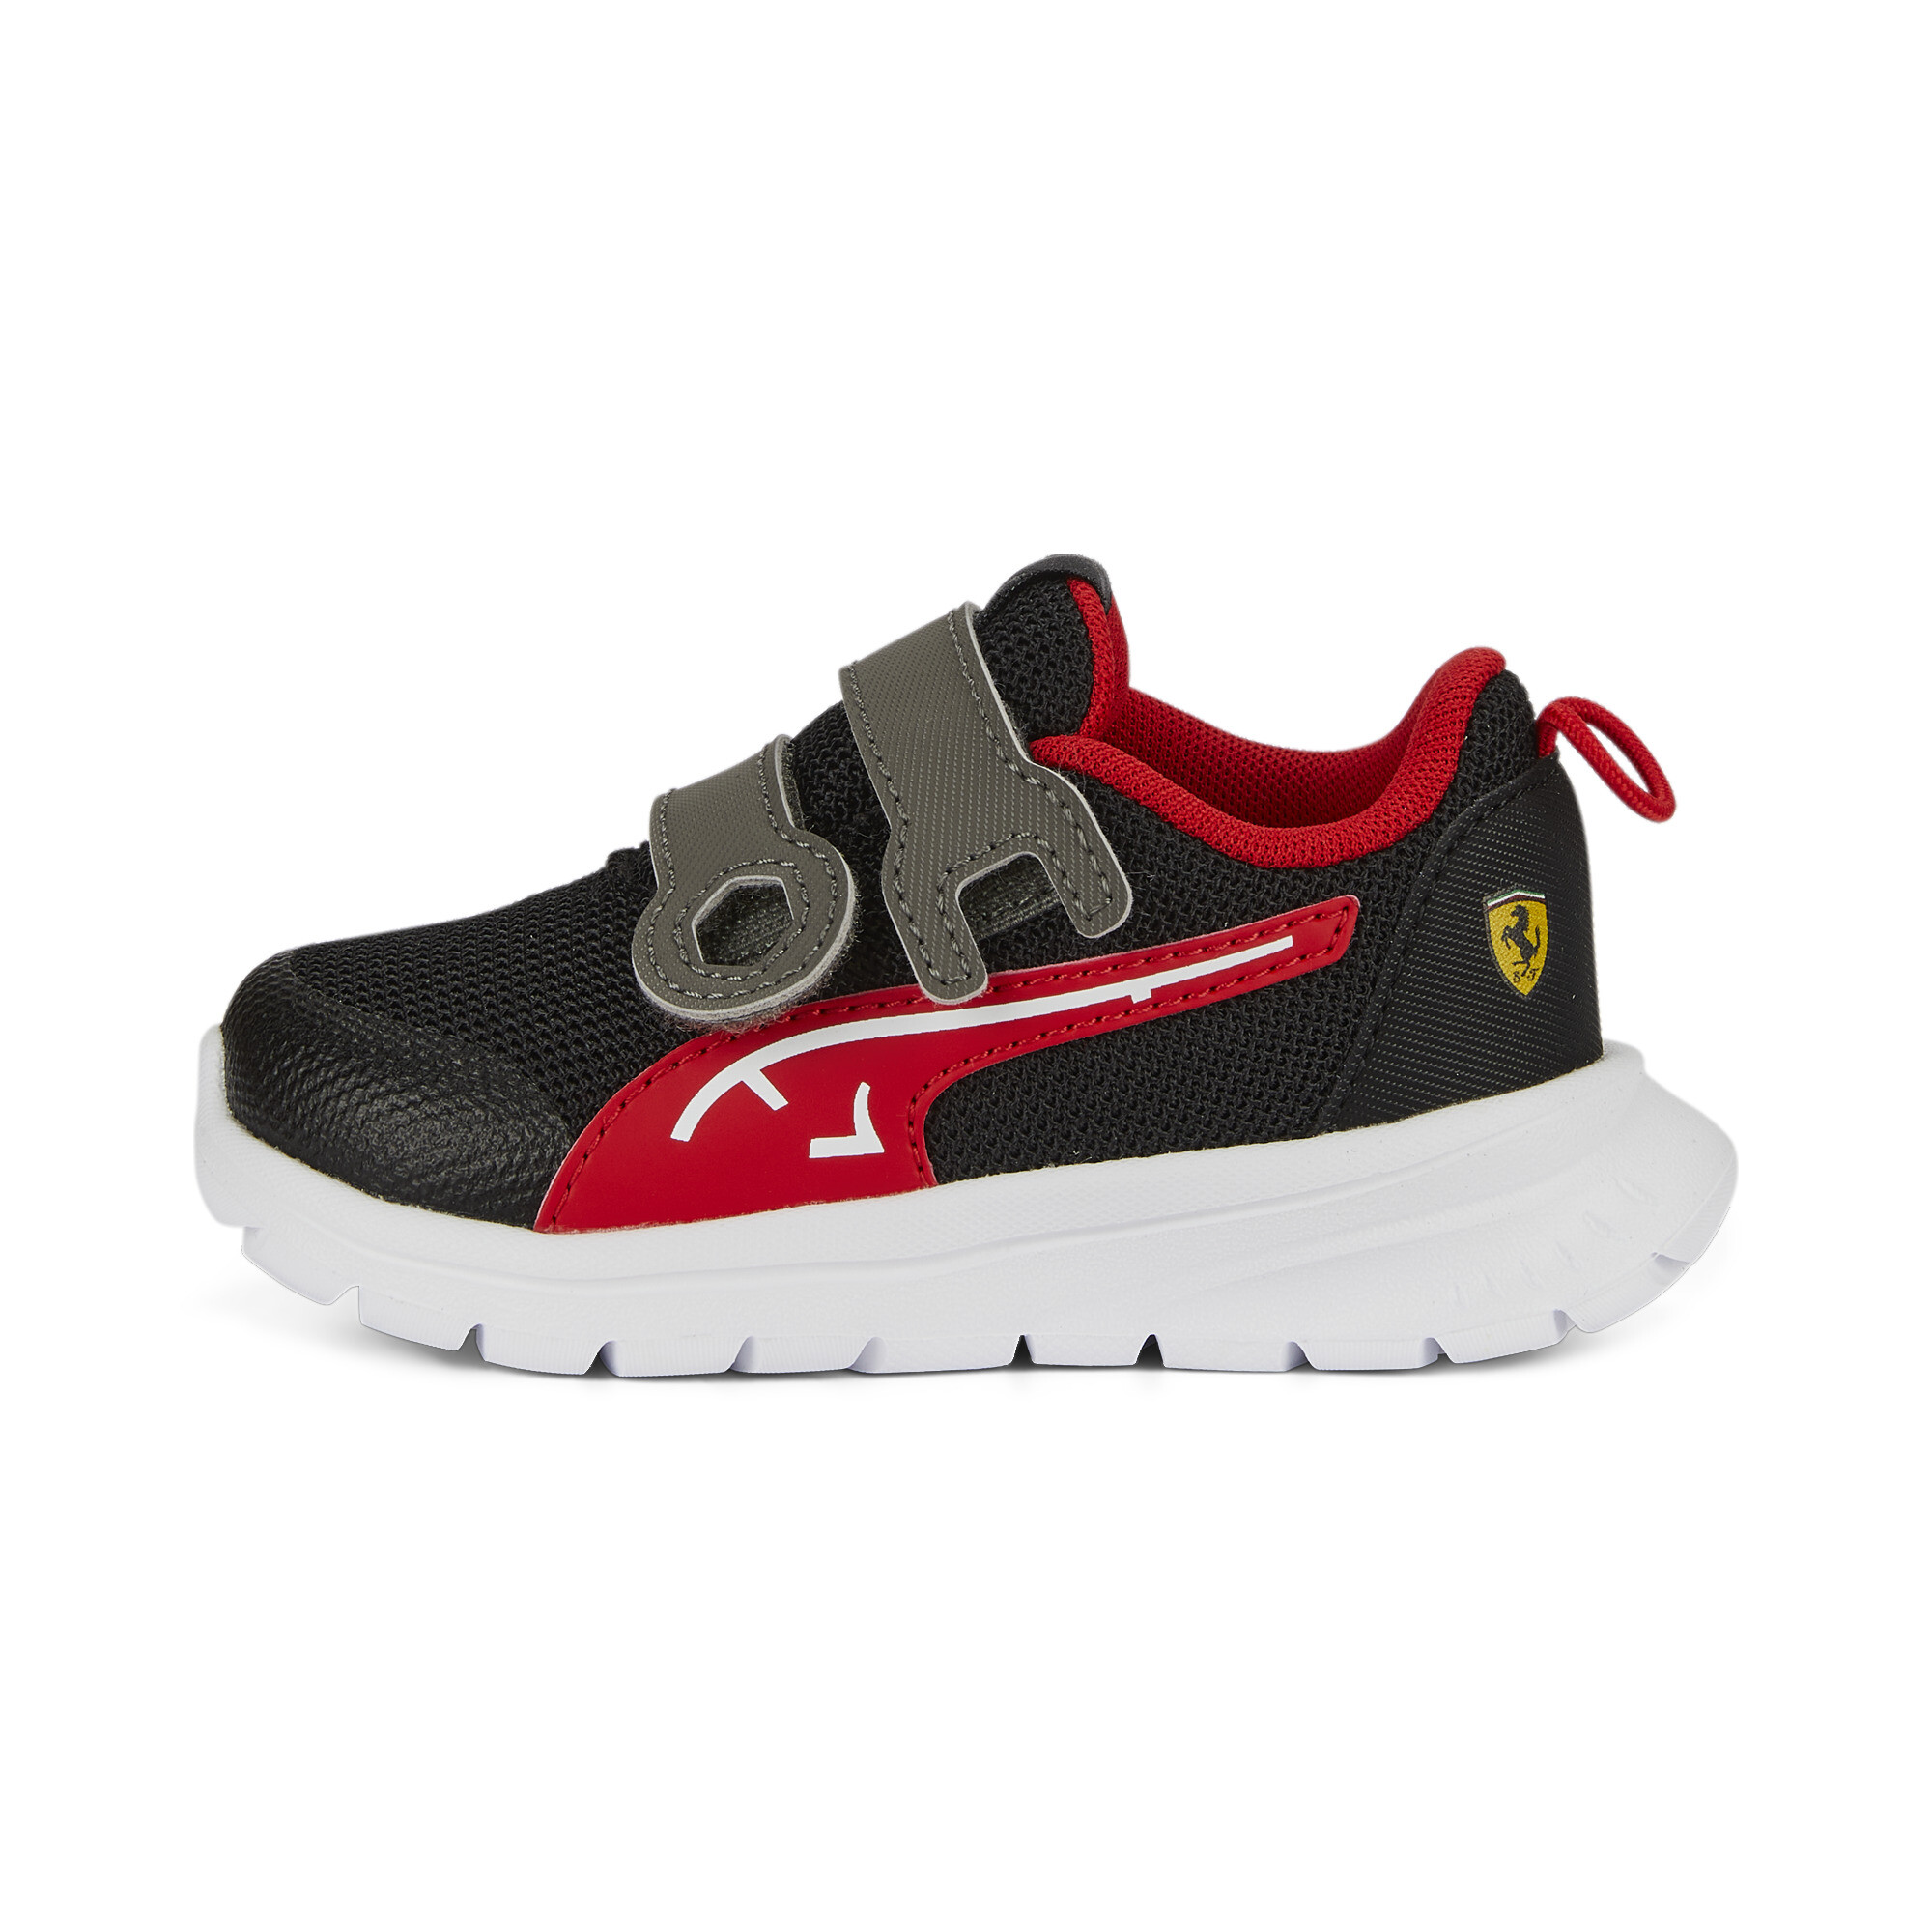 Puma Scuderia Ferrari Evolve PTC V Motorsport Shoes Babies, Black, Size 19, Shoes